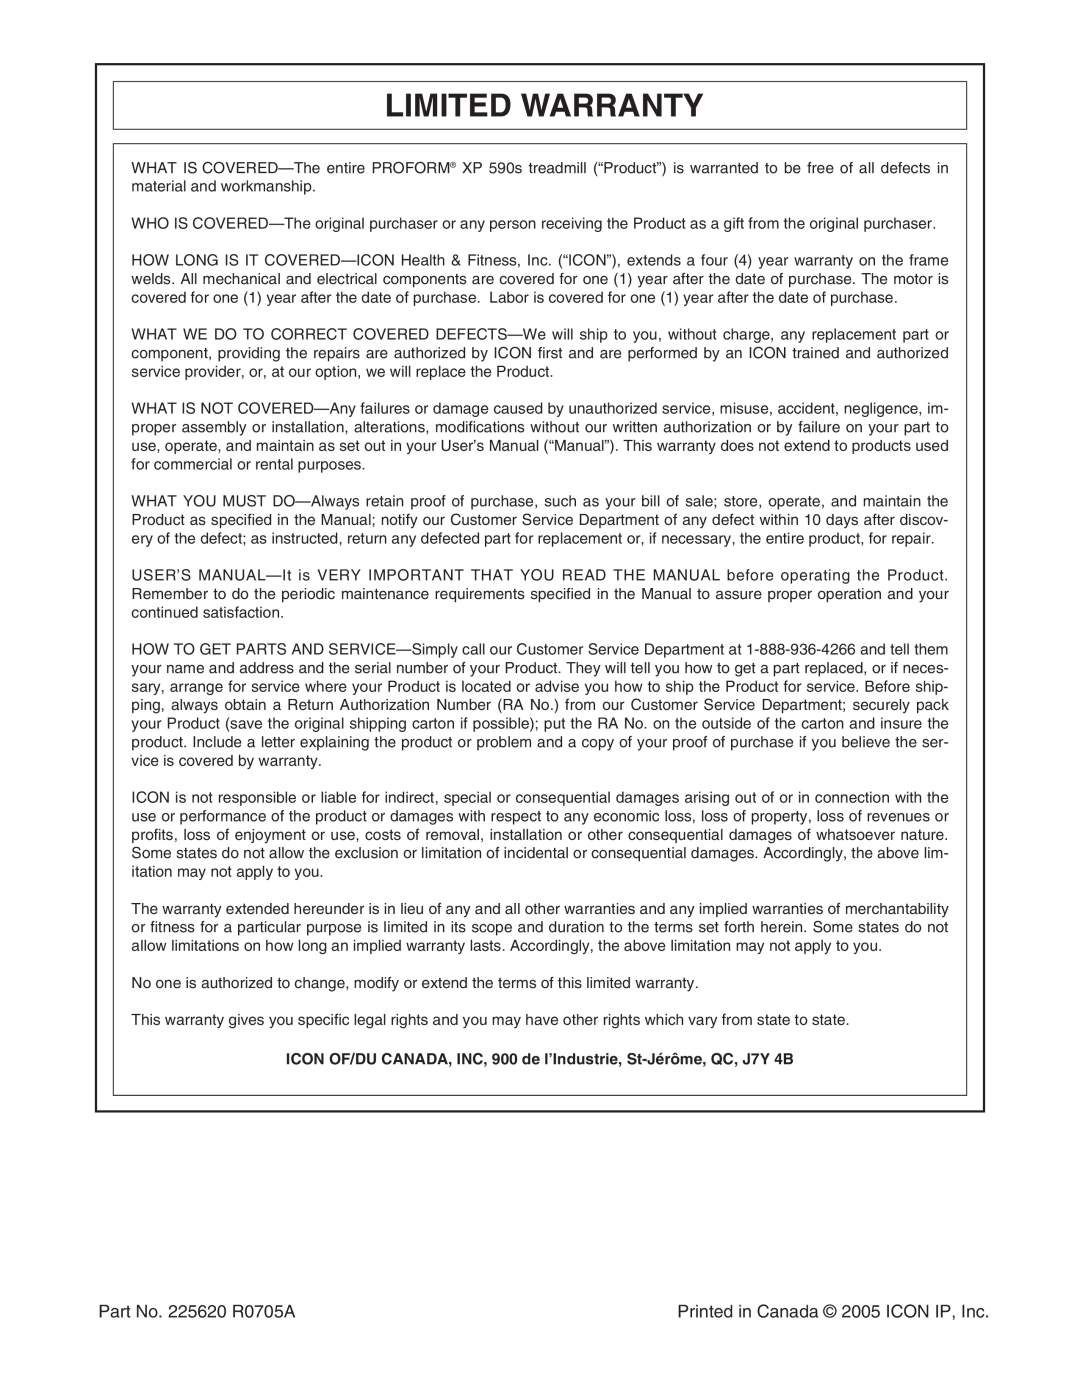 ProForm 30514.0 user manual Limited Warranty, Part No. 225620 R0705A, Printed in Canada 2005 ICON IP, Inc 